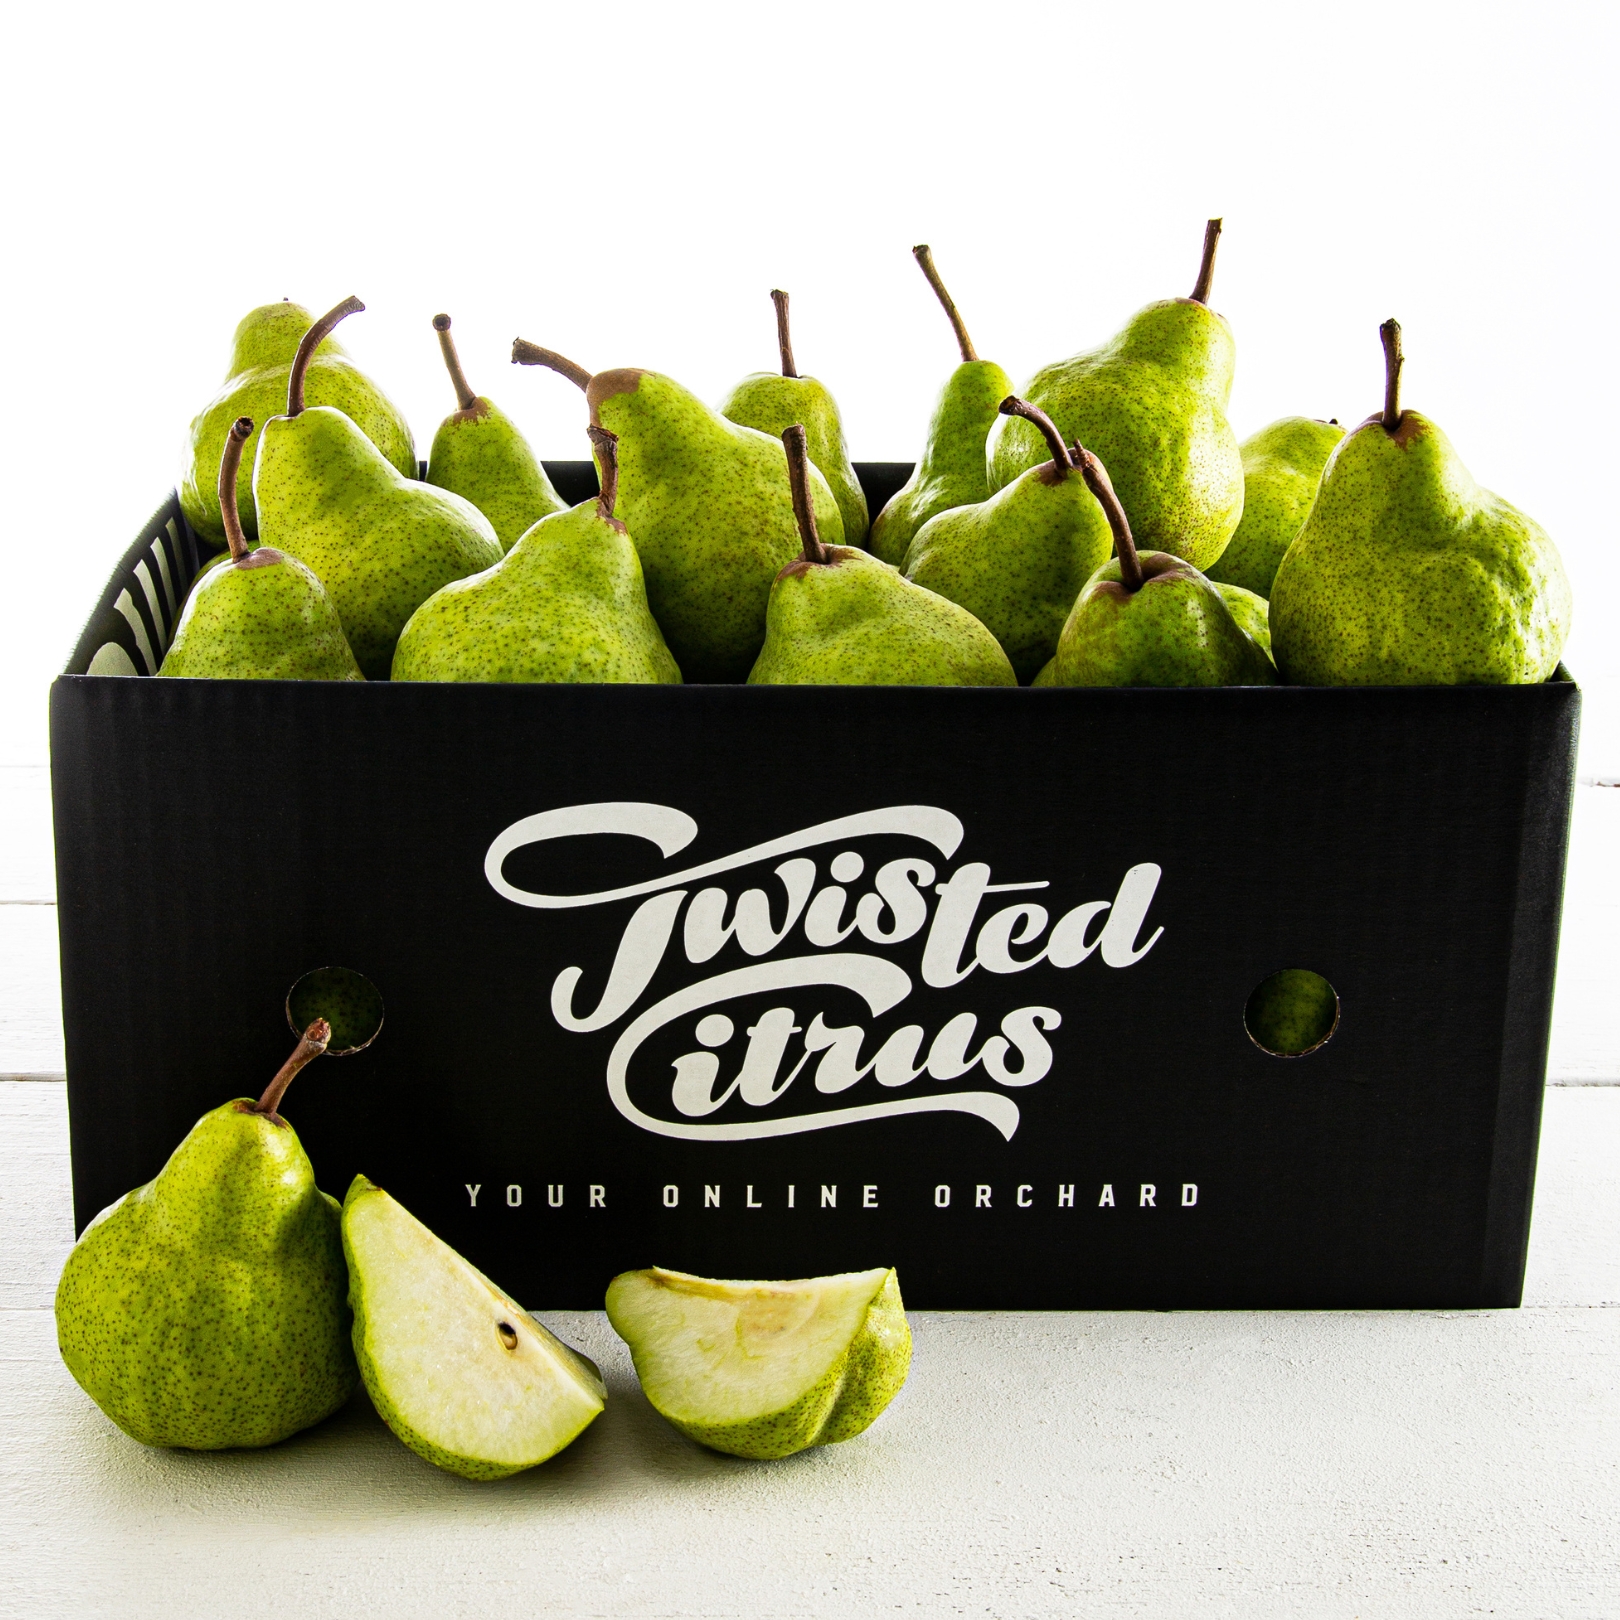 Buy Pears - Packham Online NZ - Twisted Citrus